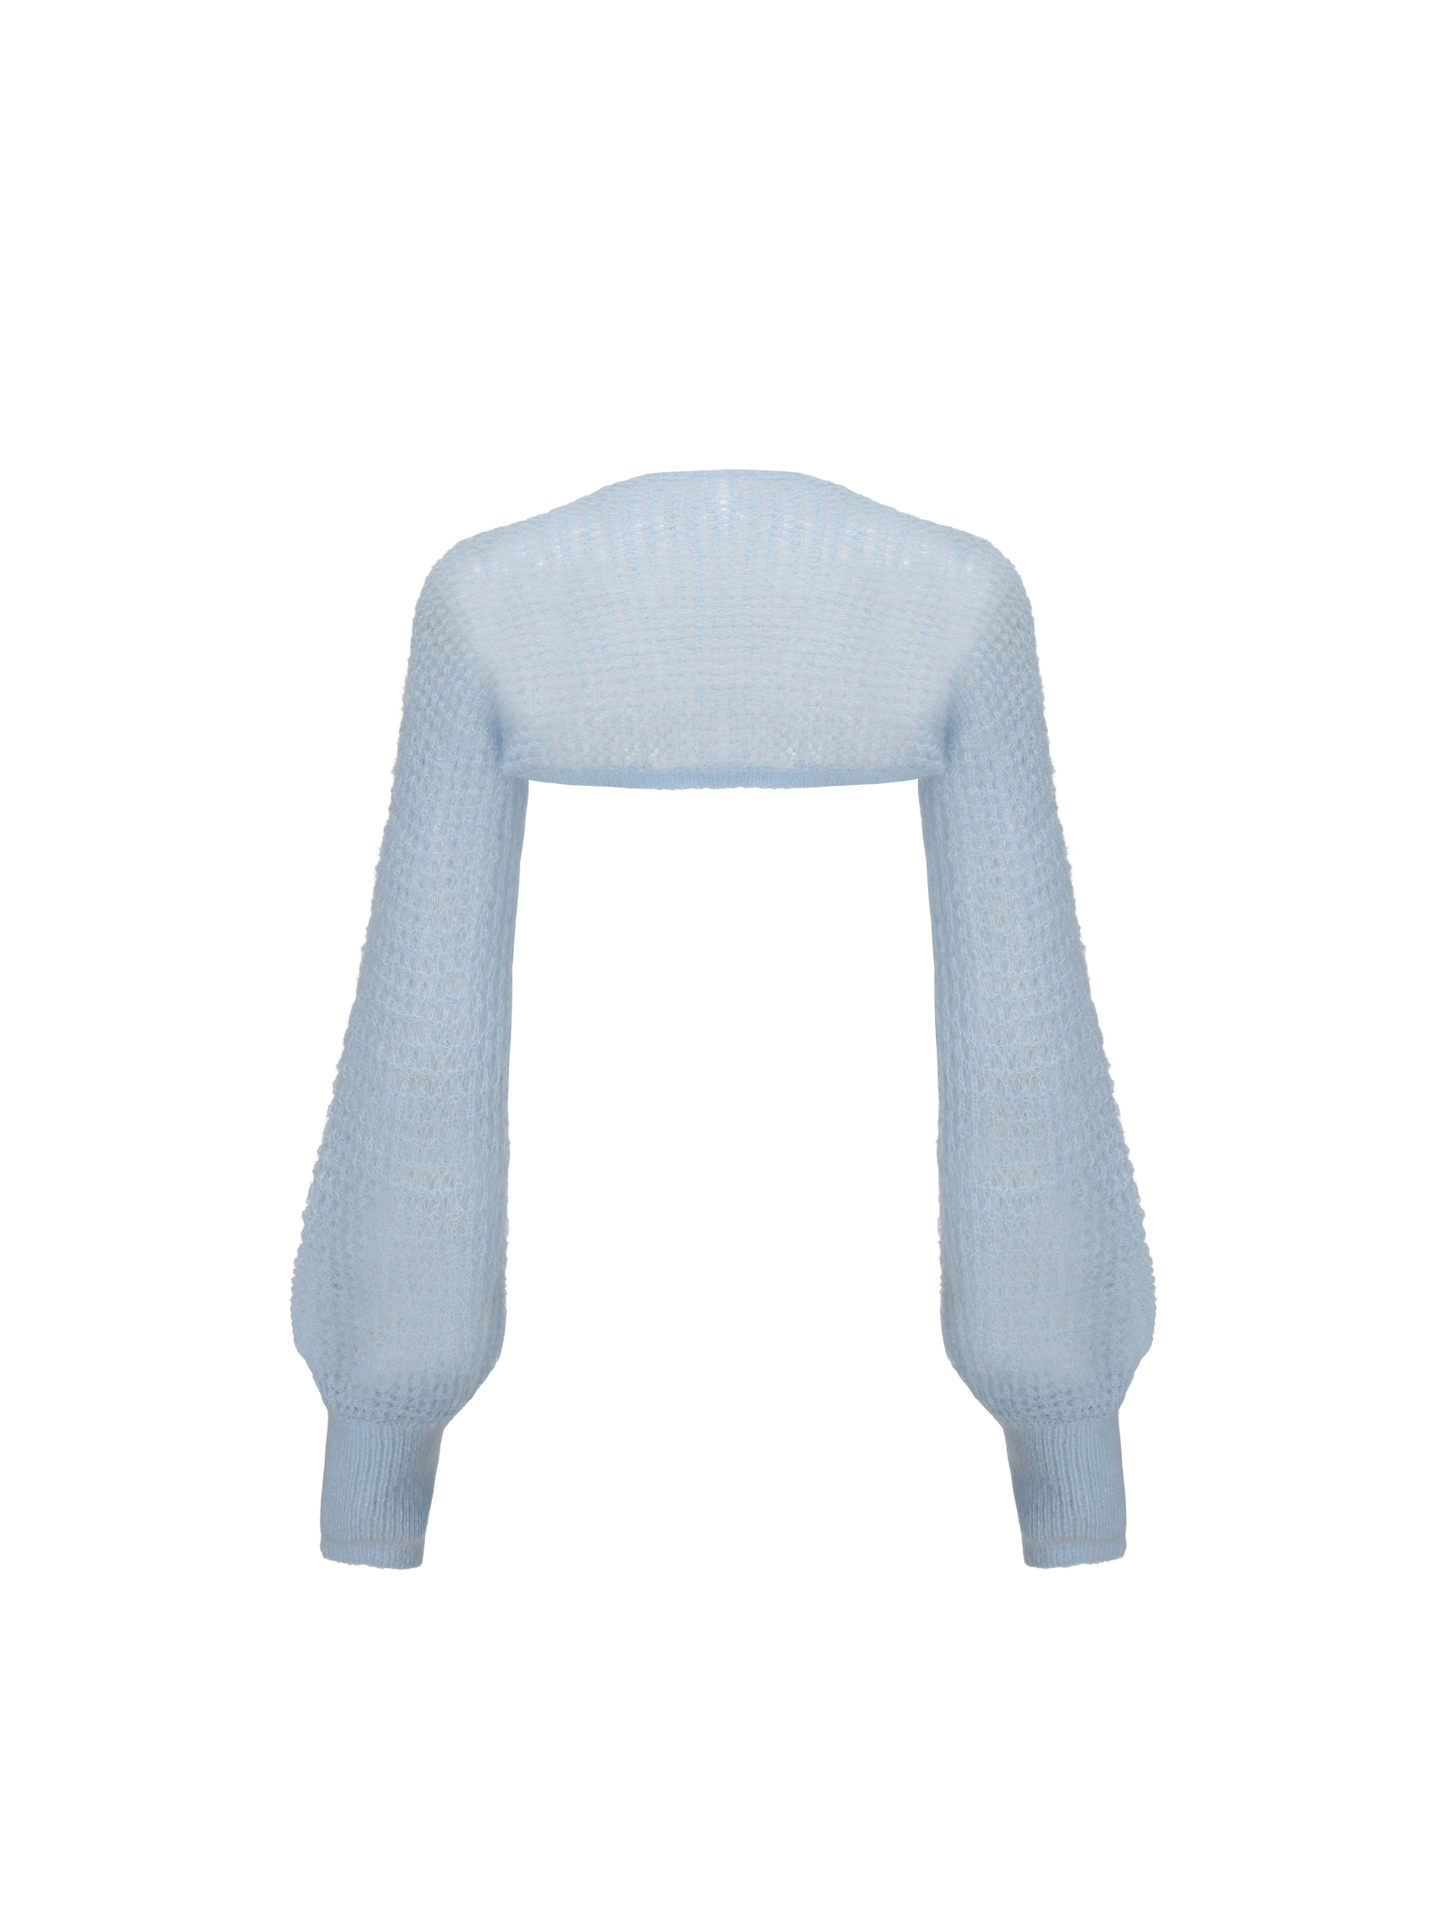 Sonya Knitted Cardigan (Blue)